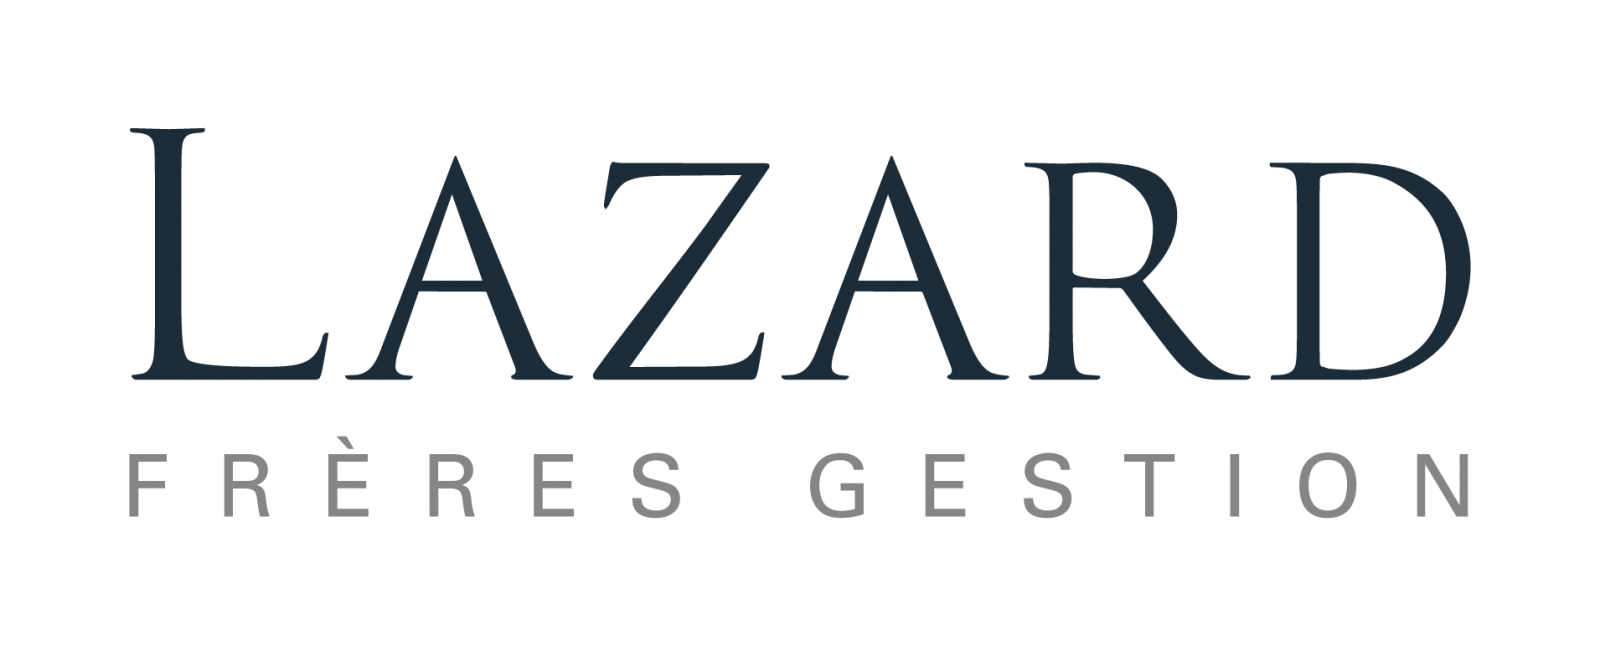 Logo de Lazard FrÃ¨res Gestion